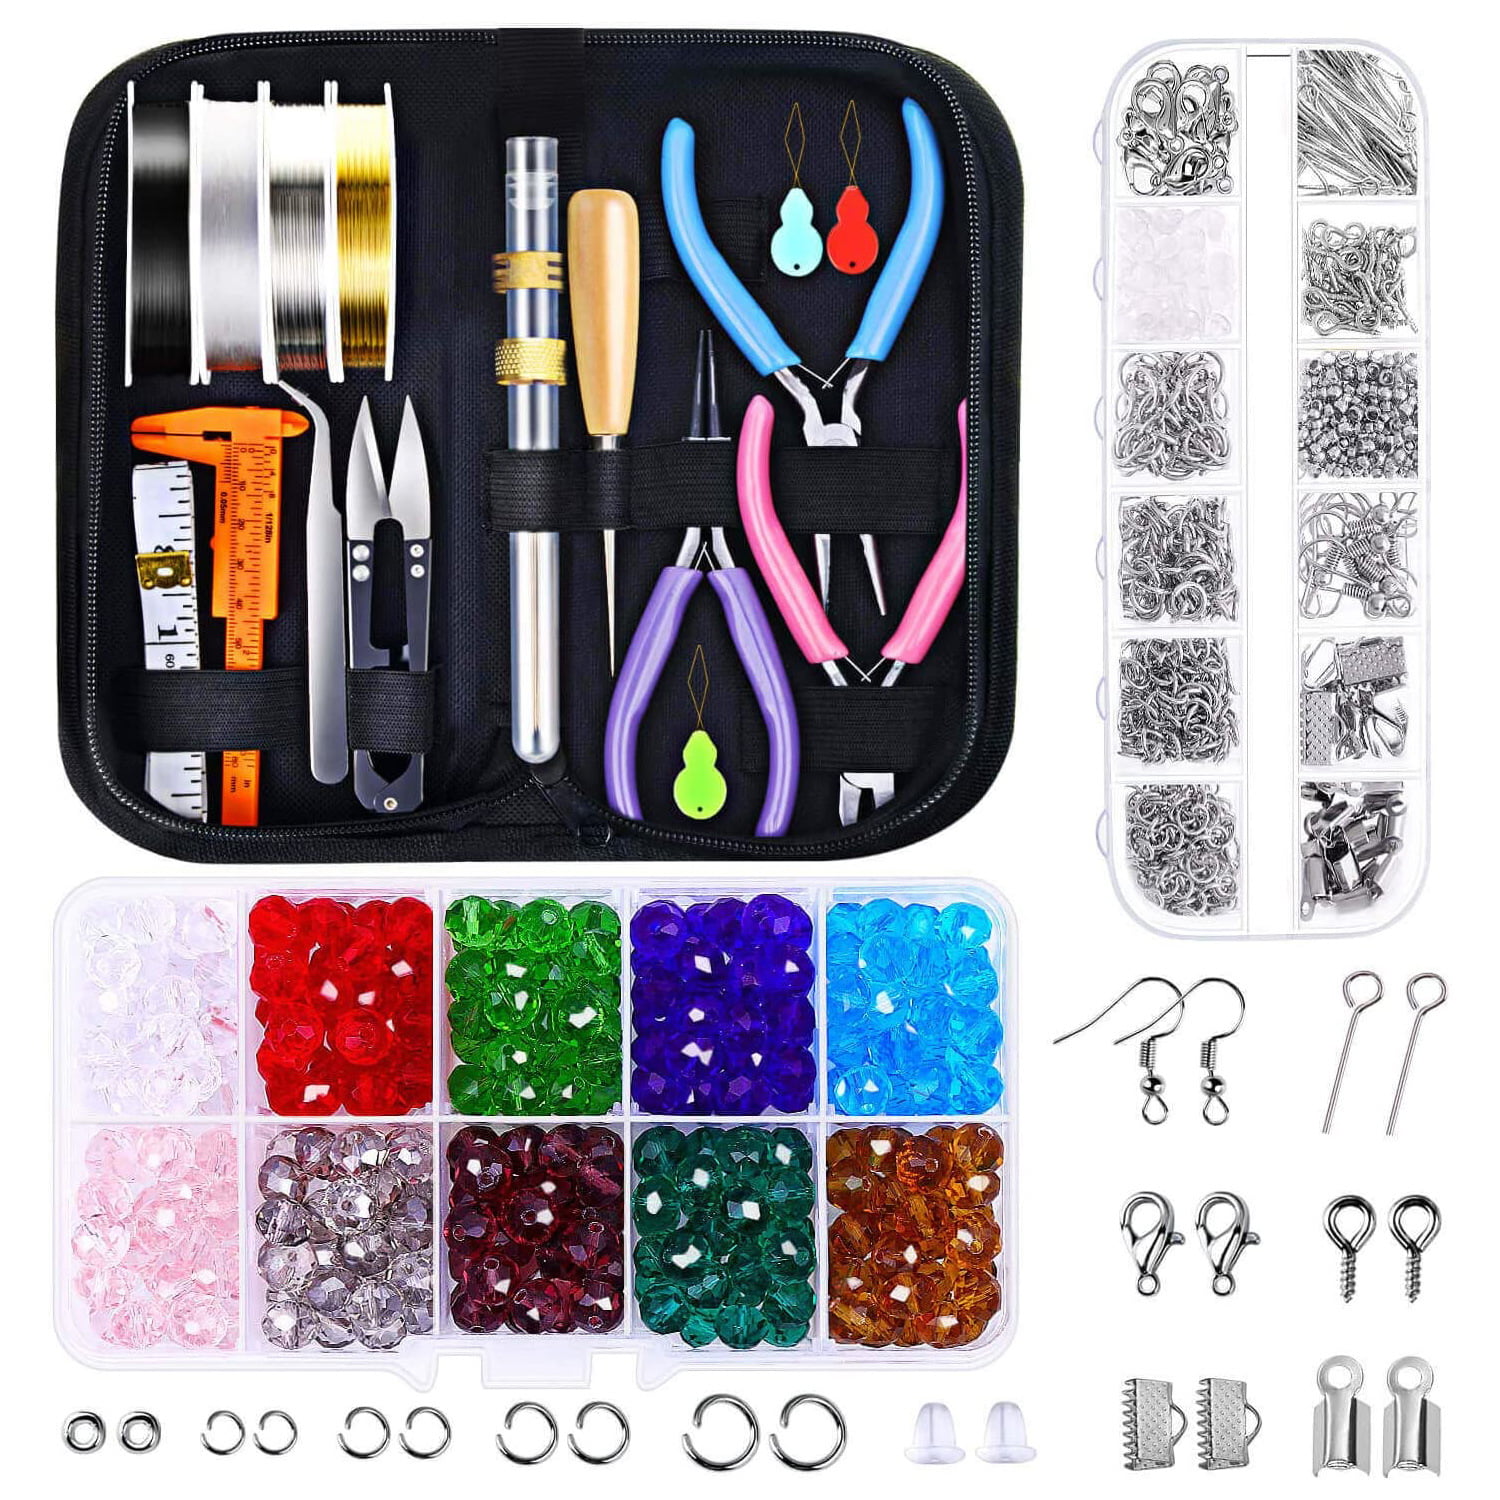 HXXF Ring Making Kit, 1670Pcs Jewelry Making Kit with 28 Colors